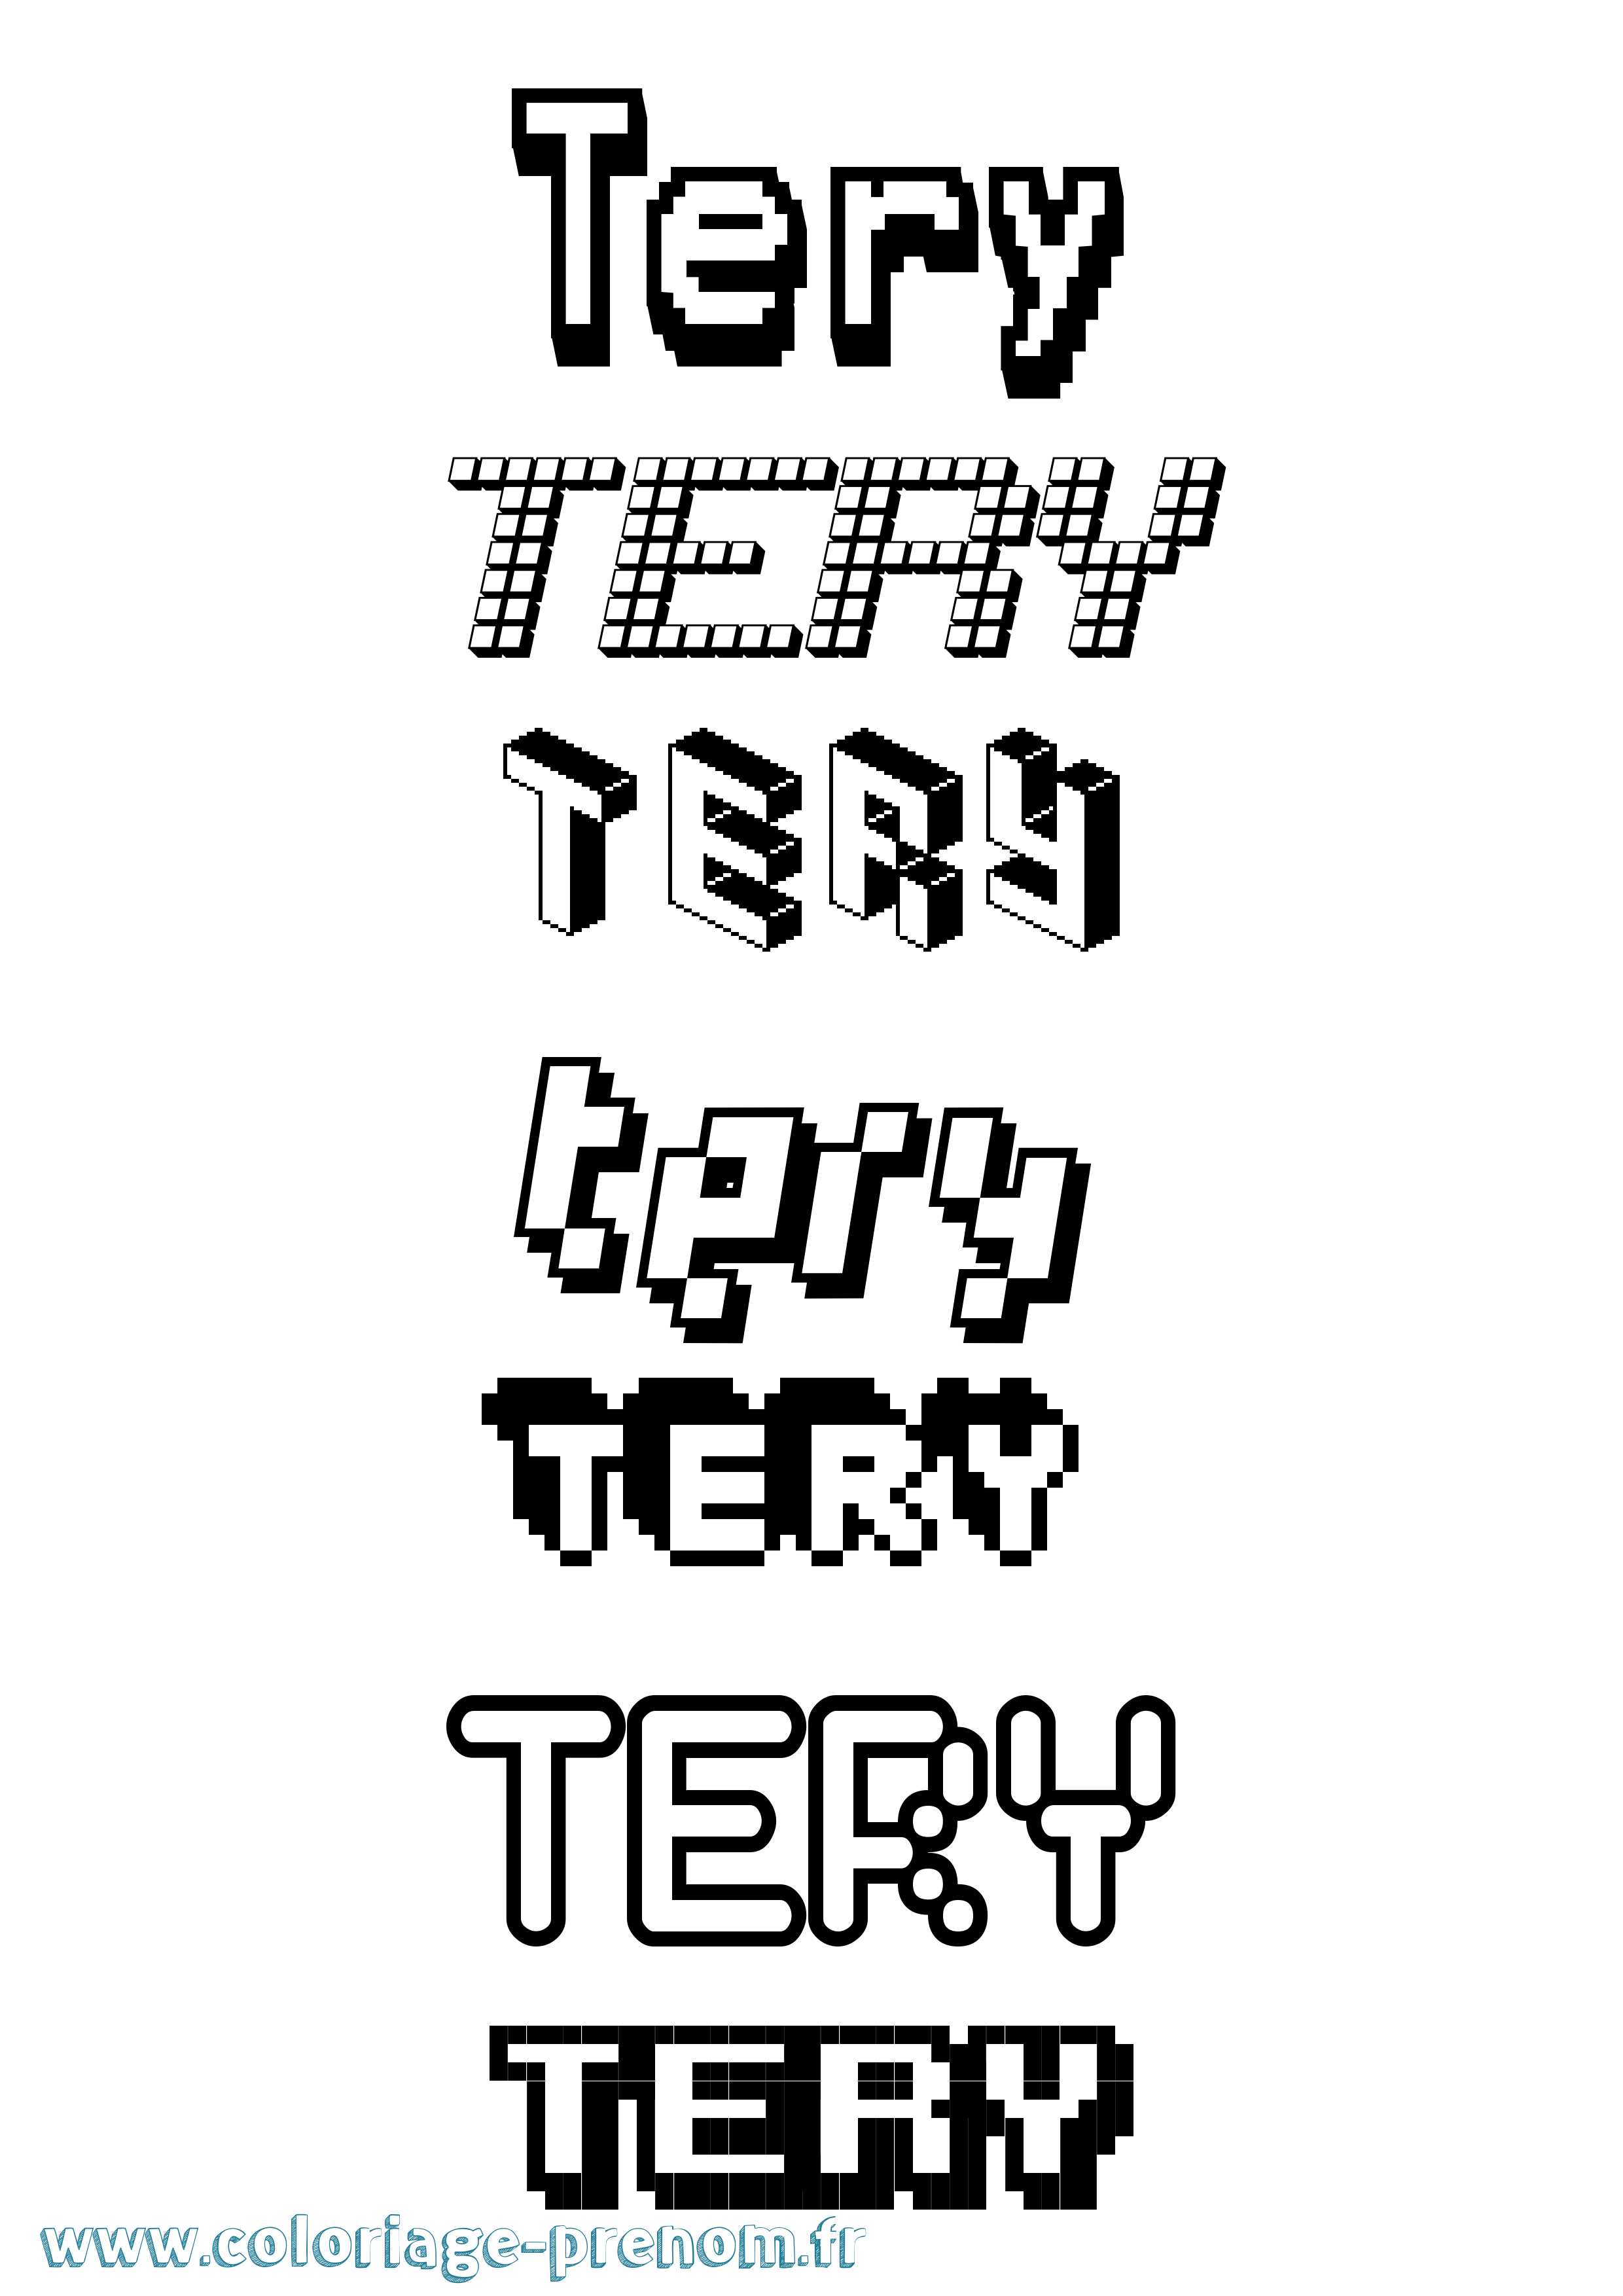 Coloriage prénom Tery Pixel